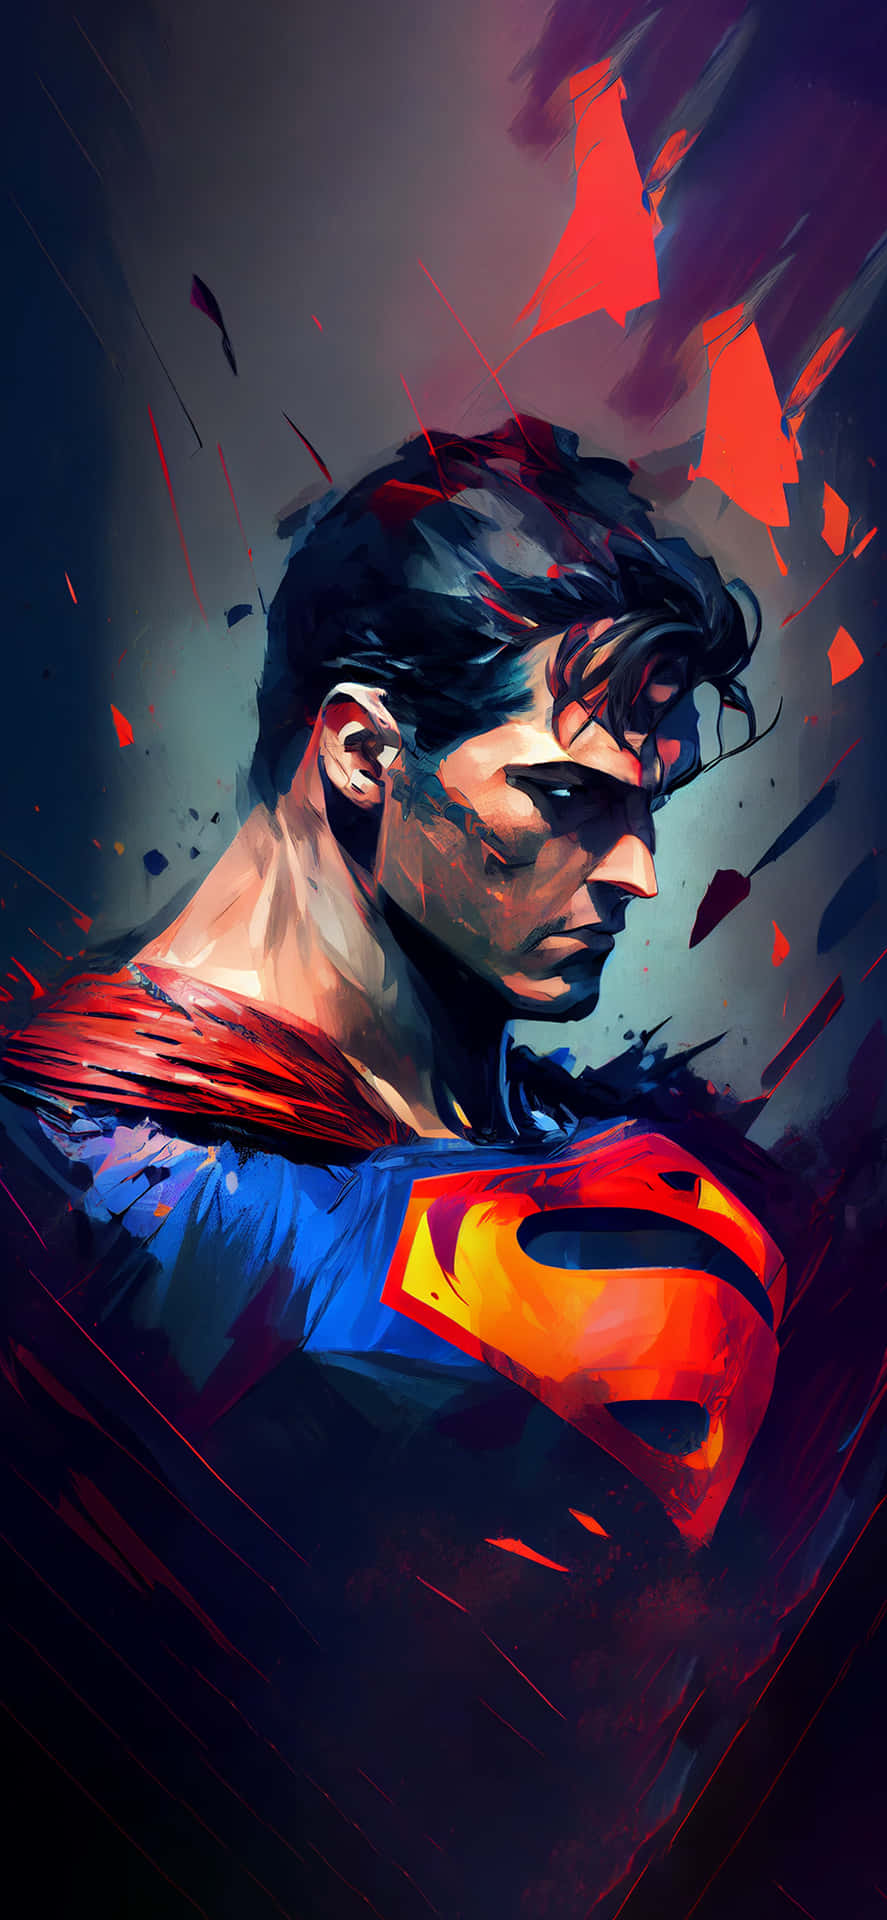 Supermanbakgrundsbild.